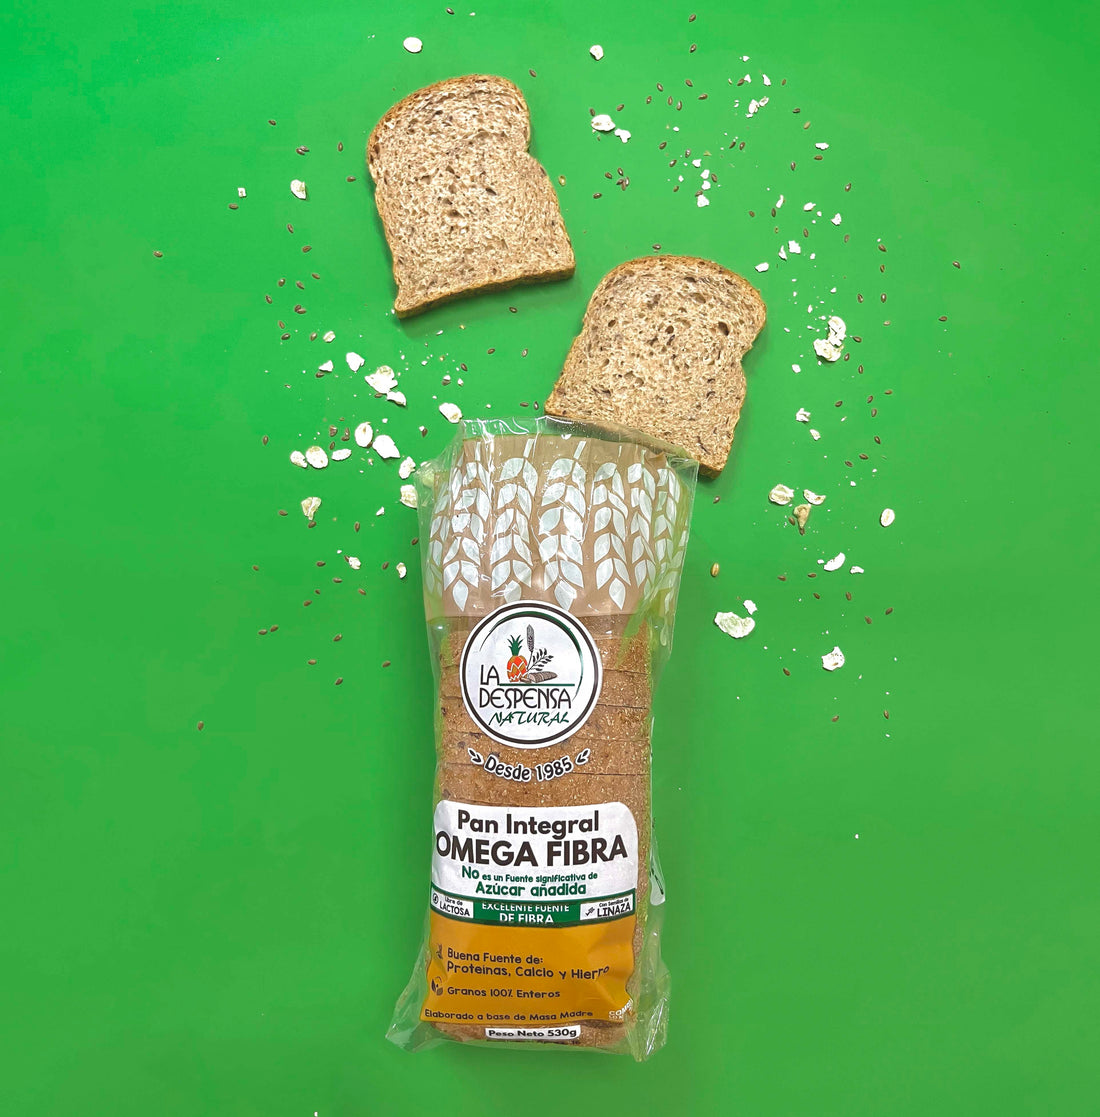 Pan Integral Omega Fibra: Imagen de un pan integral enriquecido con omega y fibra.